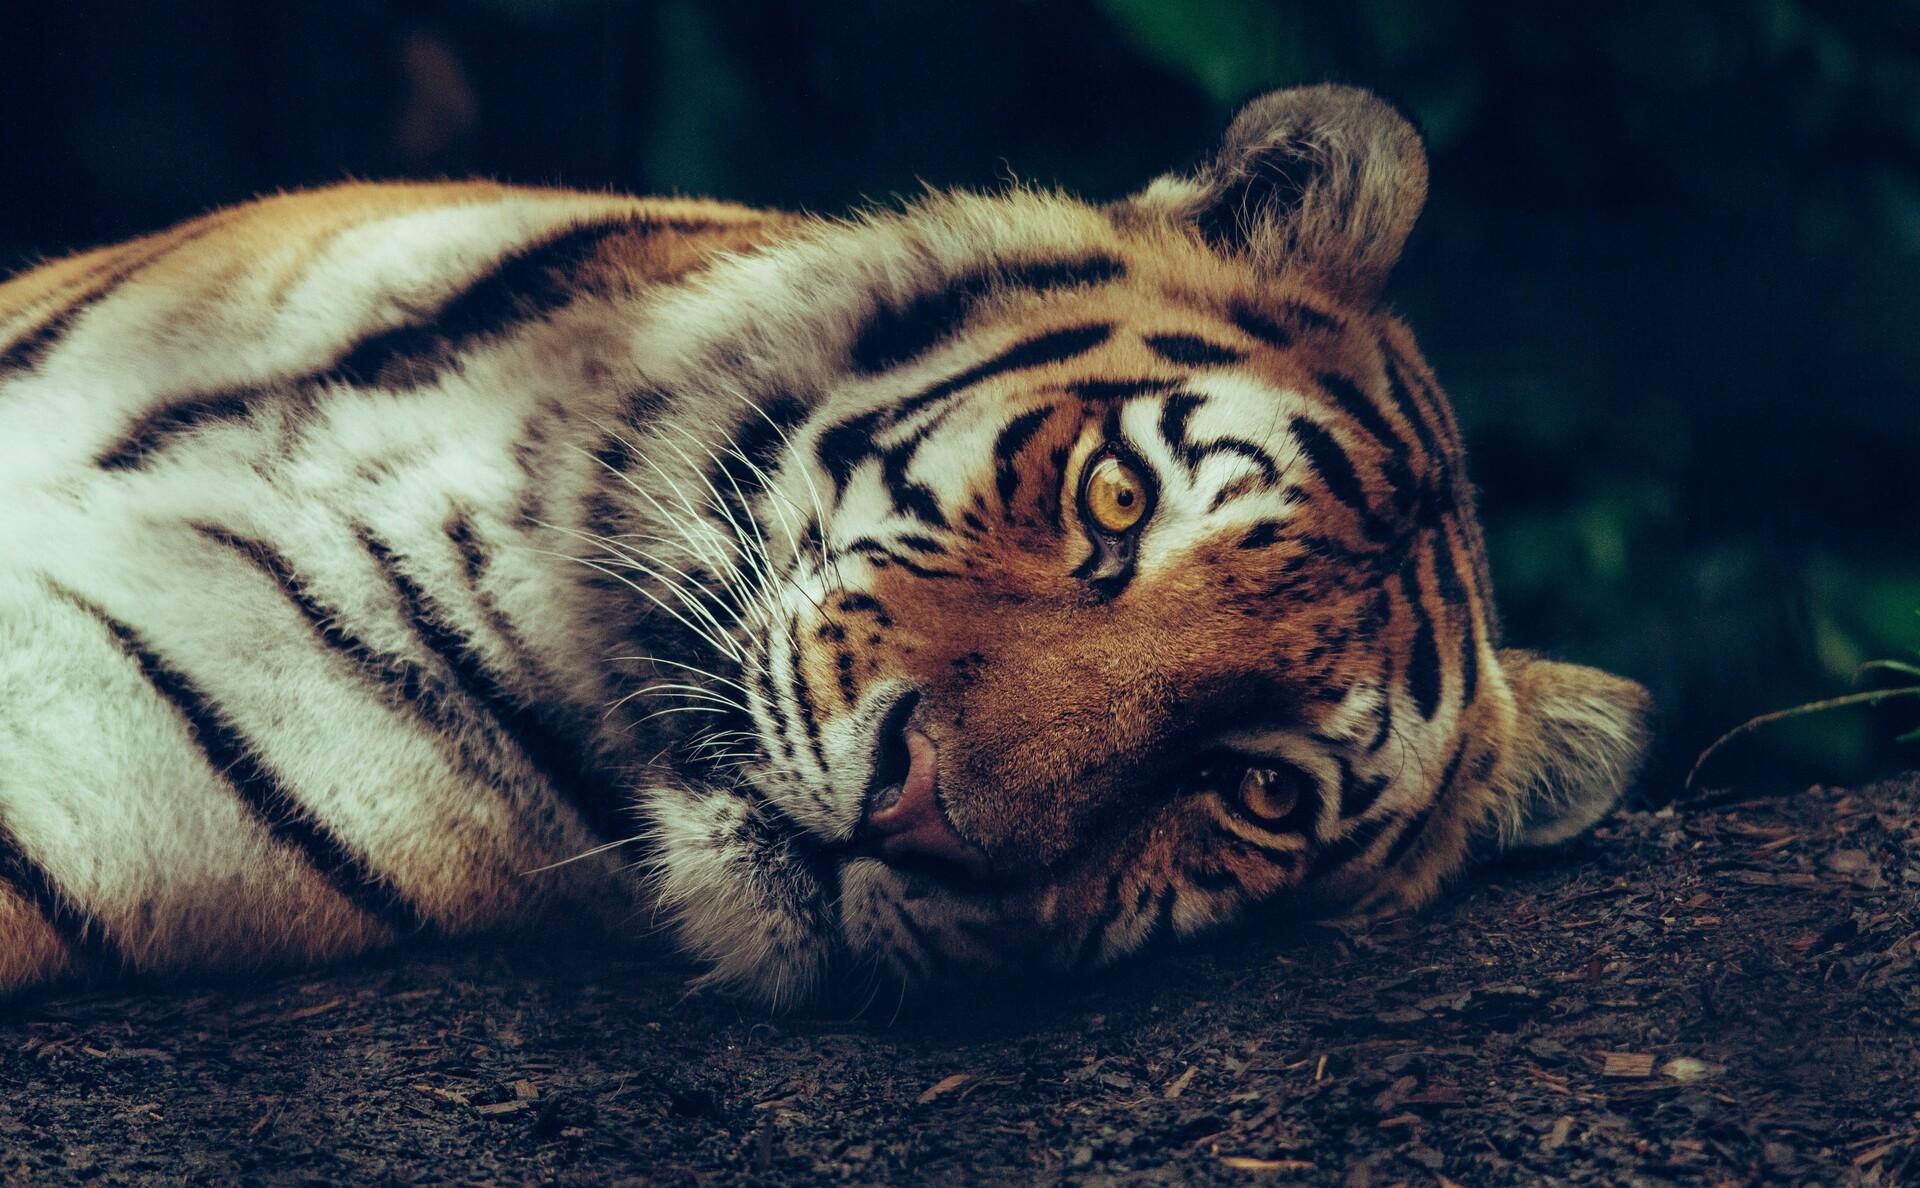 Tigerhandel stoppen